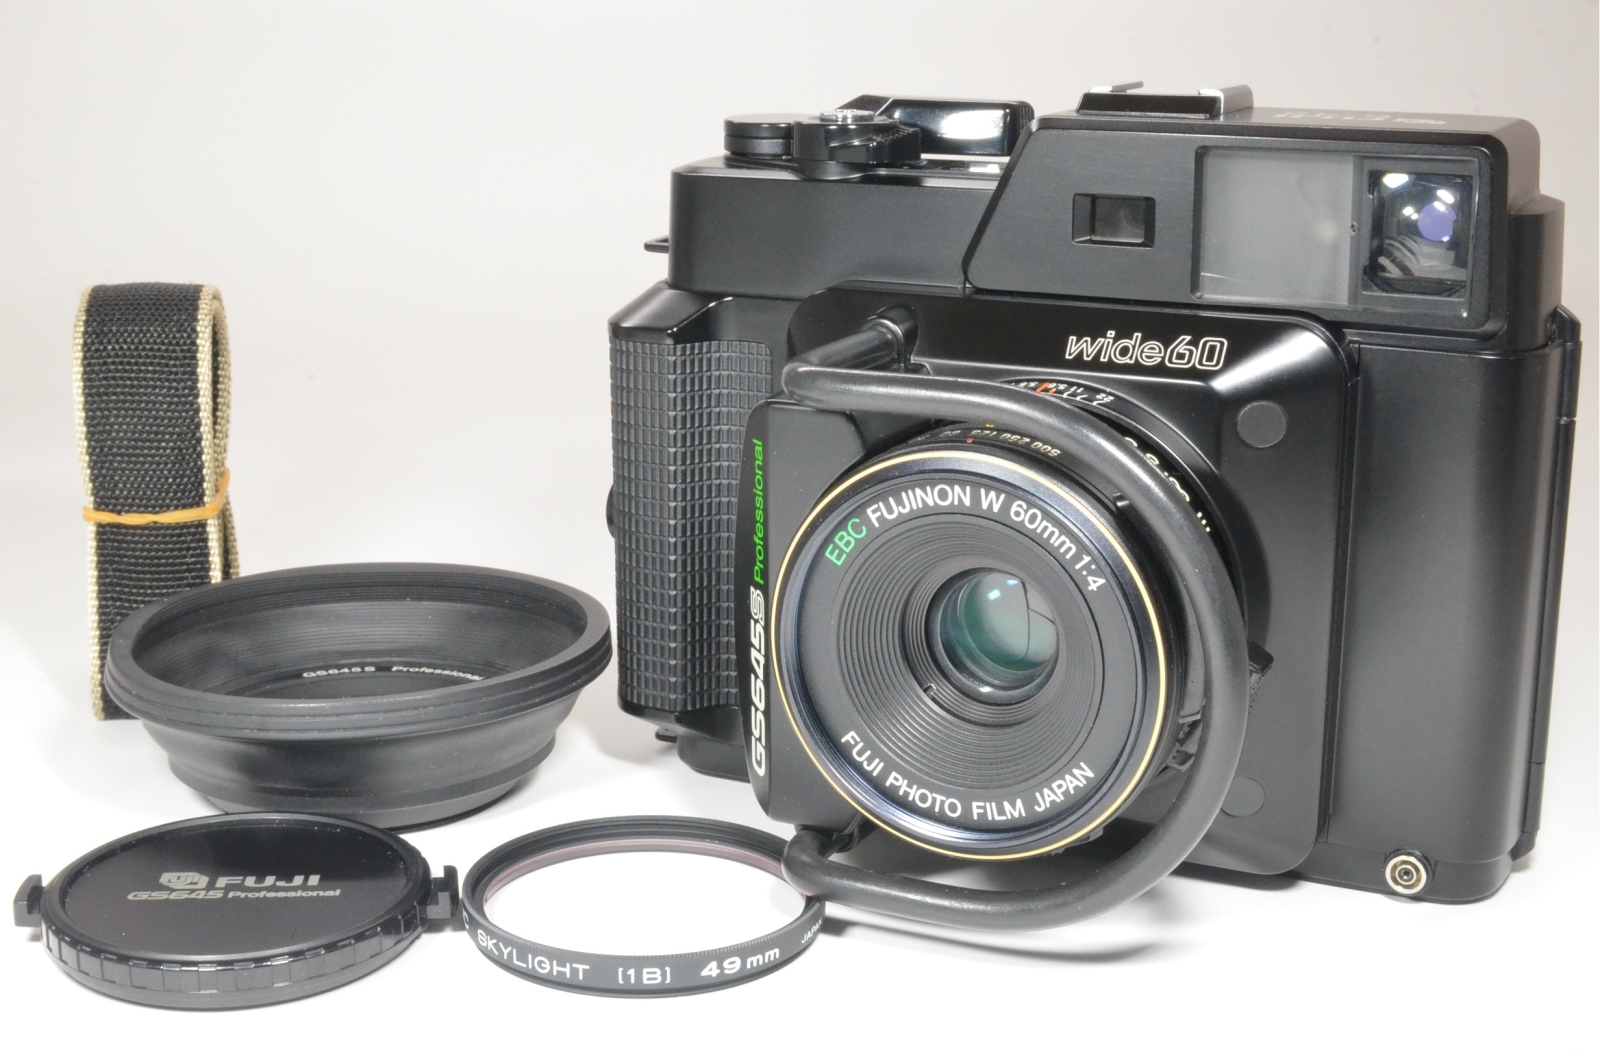 Fuji Fujifilm GS645S Fujinon W 60mm f4 camera from Japan Shooting ...